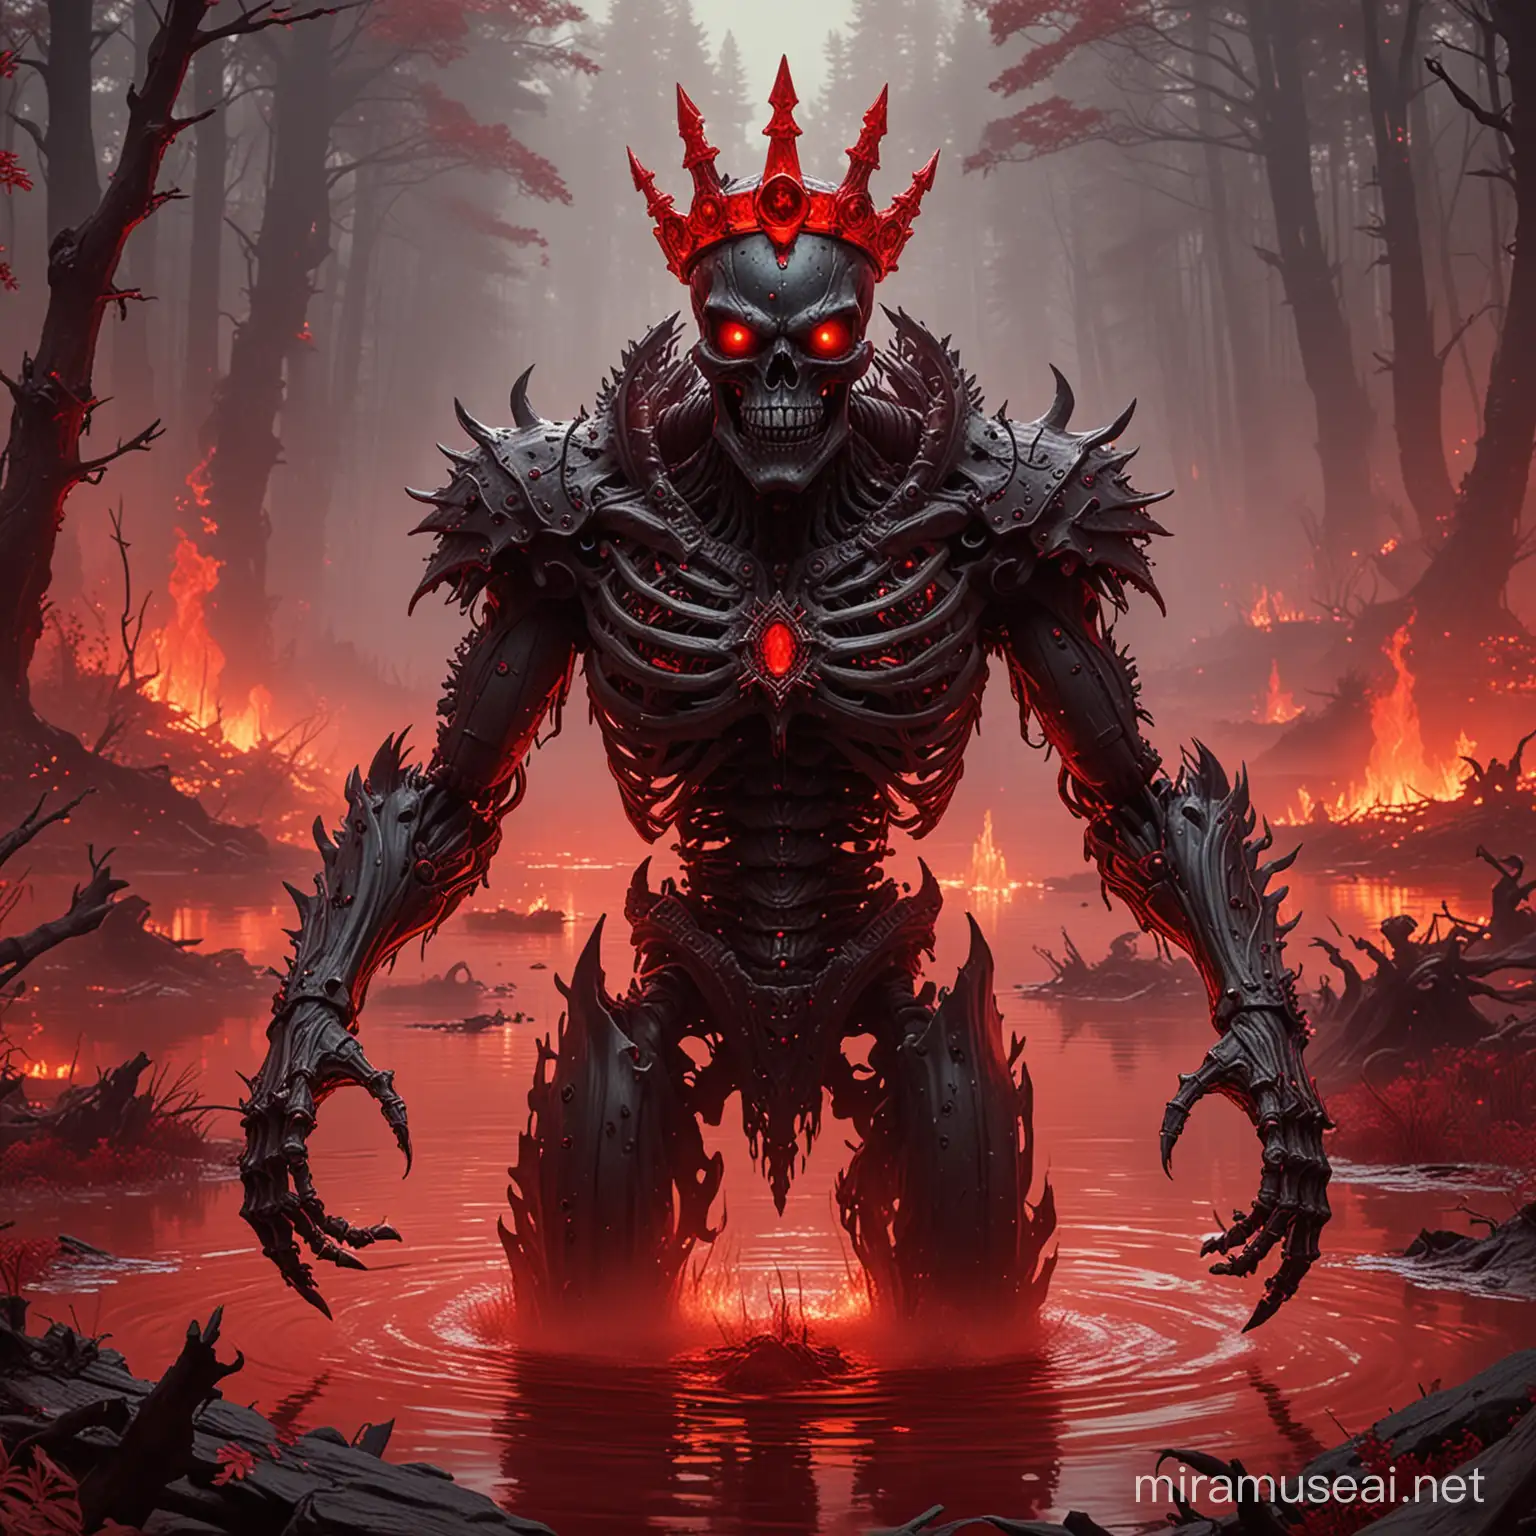 Giant Scarlet Skeleton King Amidst Fiery Forest Destruction